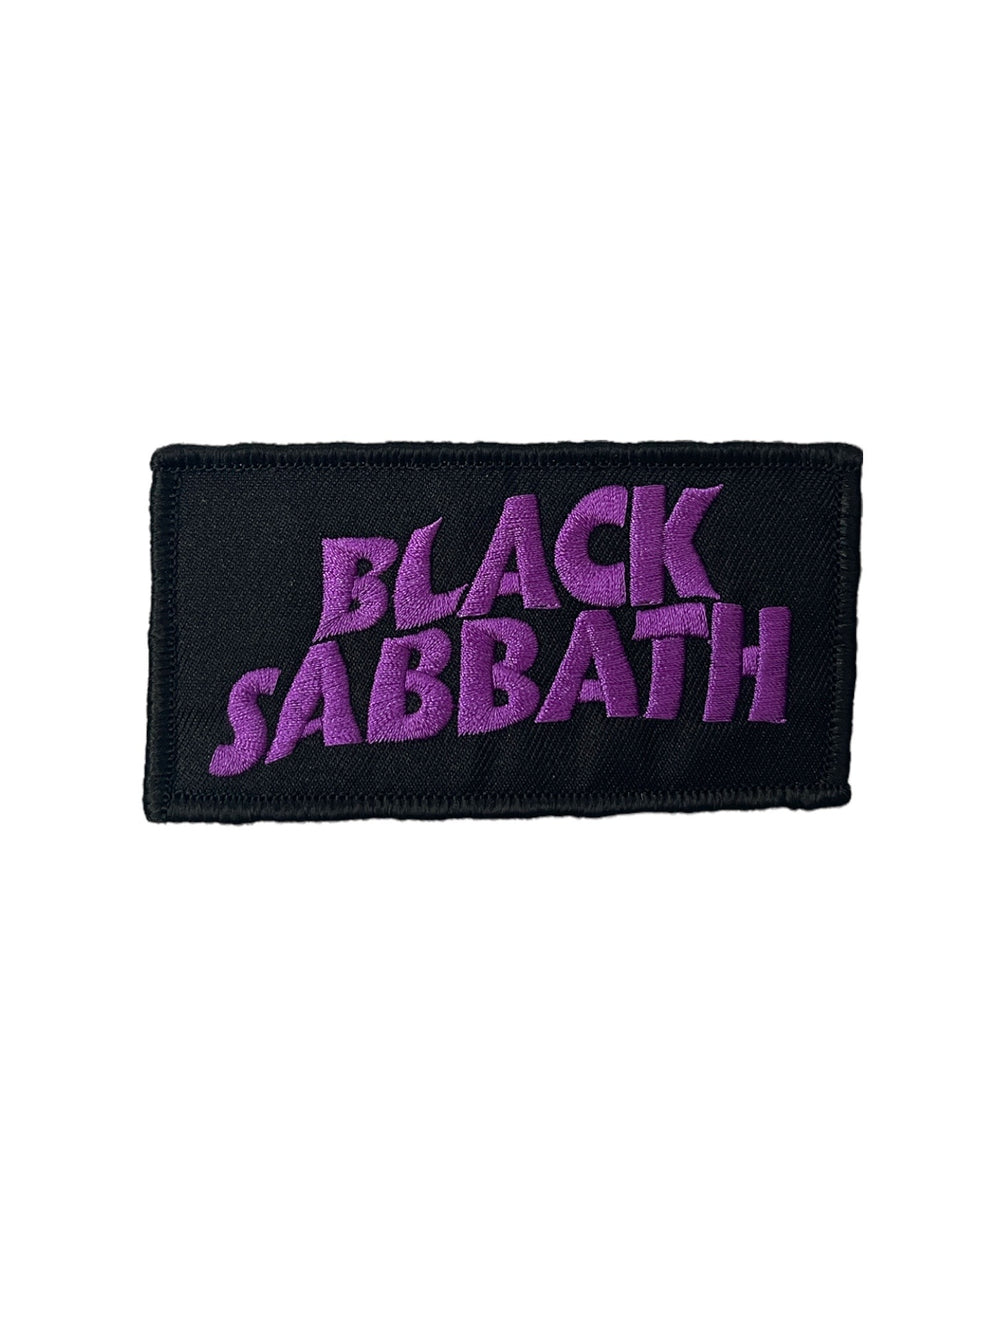 Black Sabbath Standard Patch: Wavy Logo Official Woven Patch Brand New